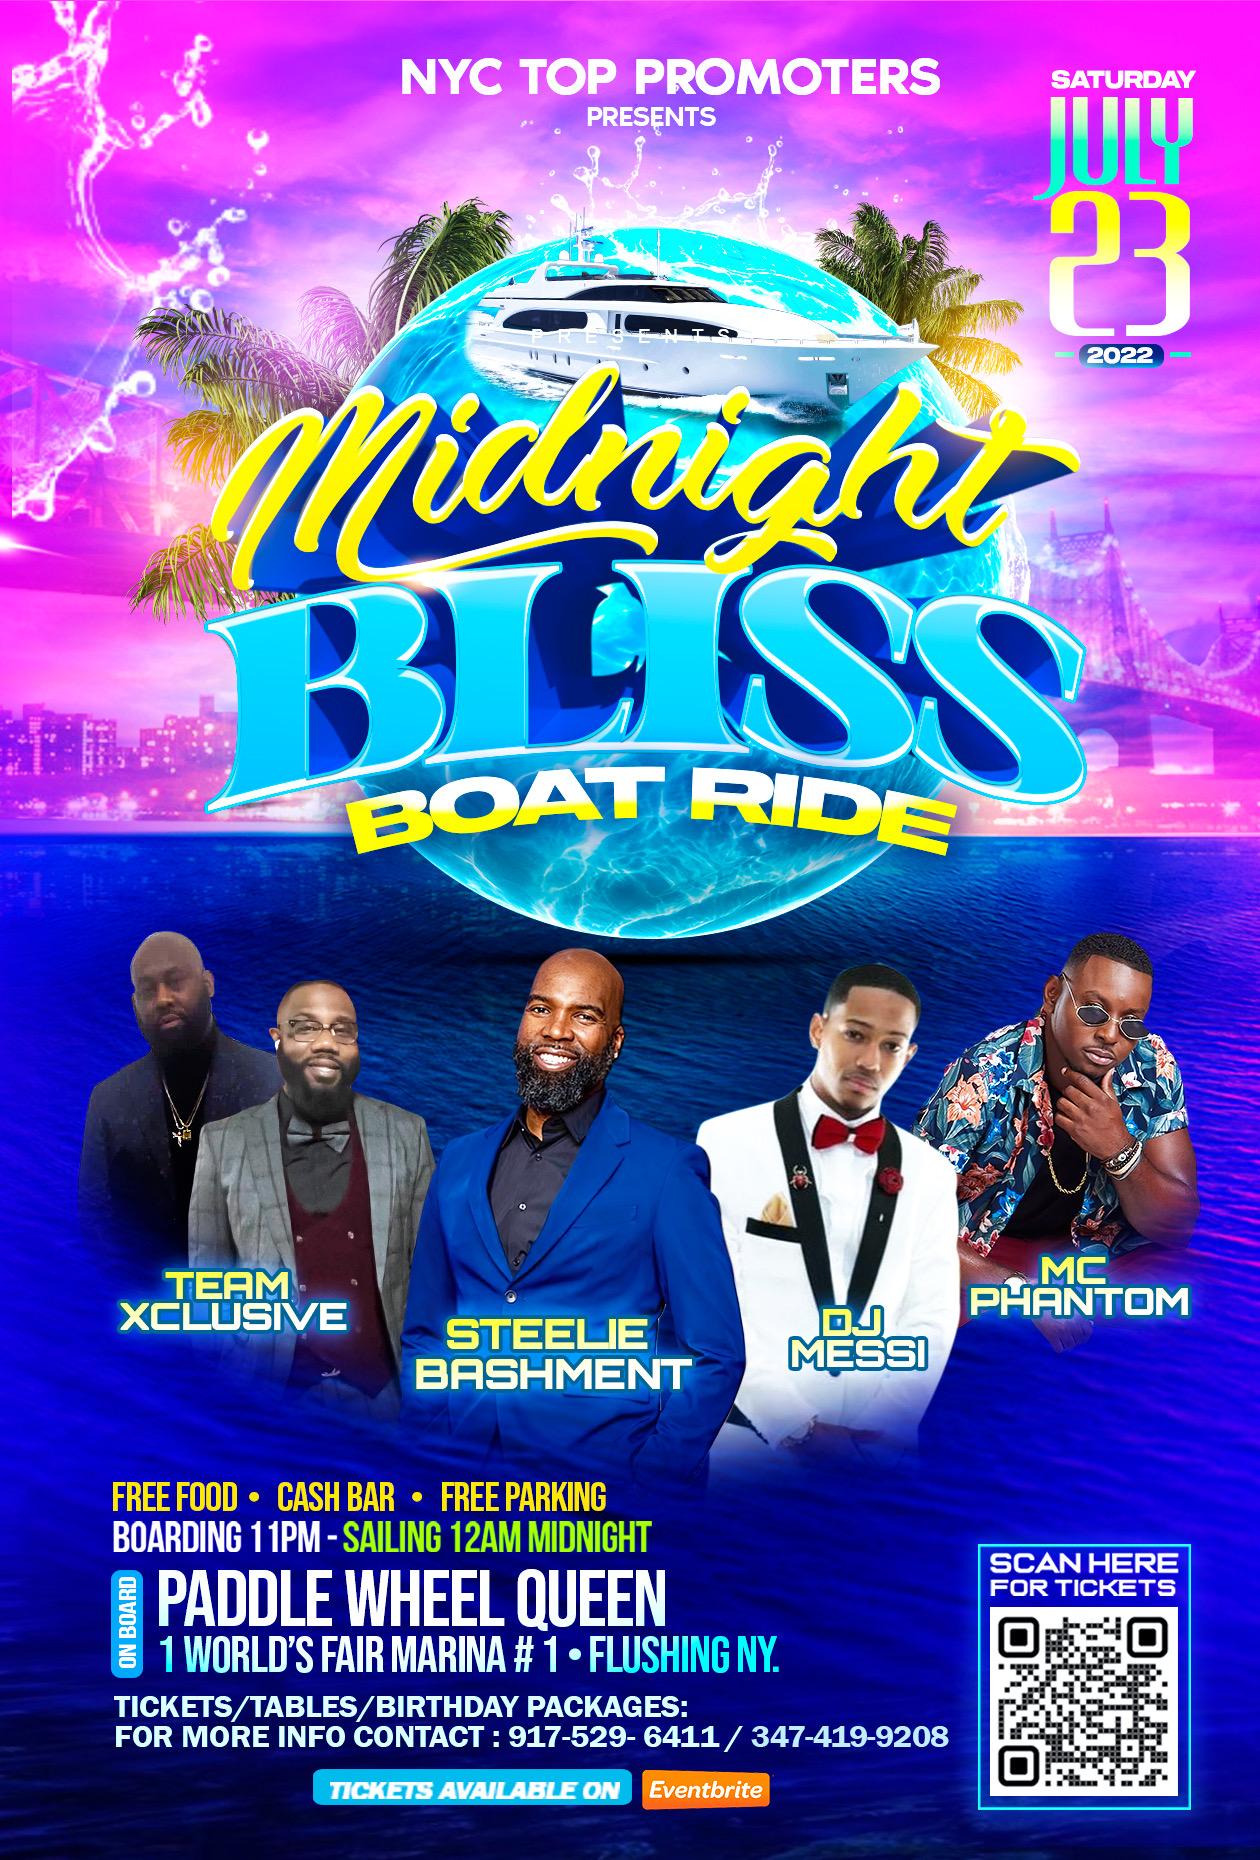 Bliss Midnight Boat Ride image